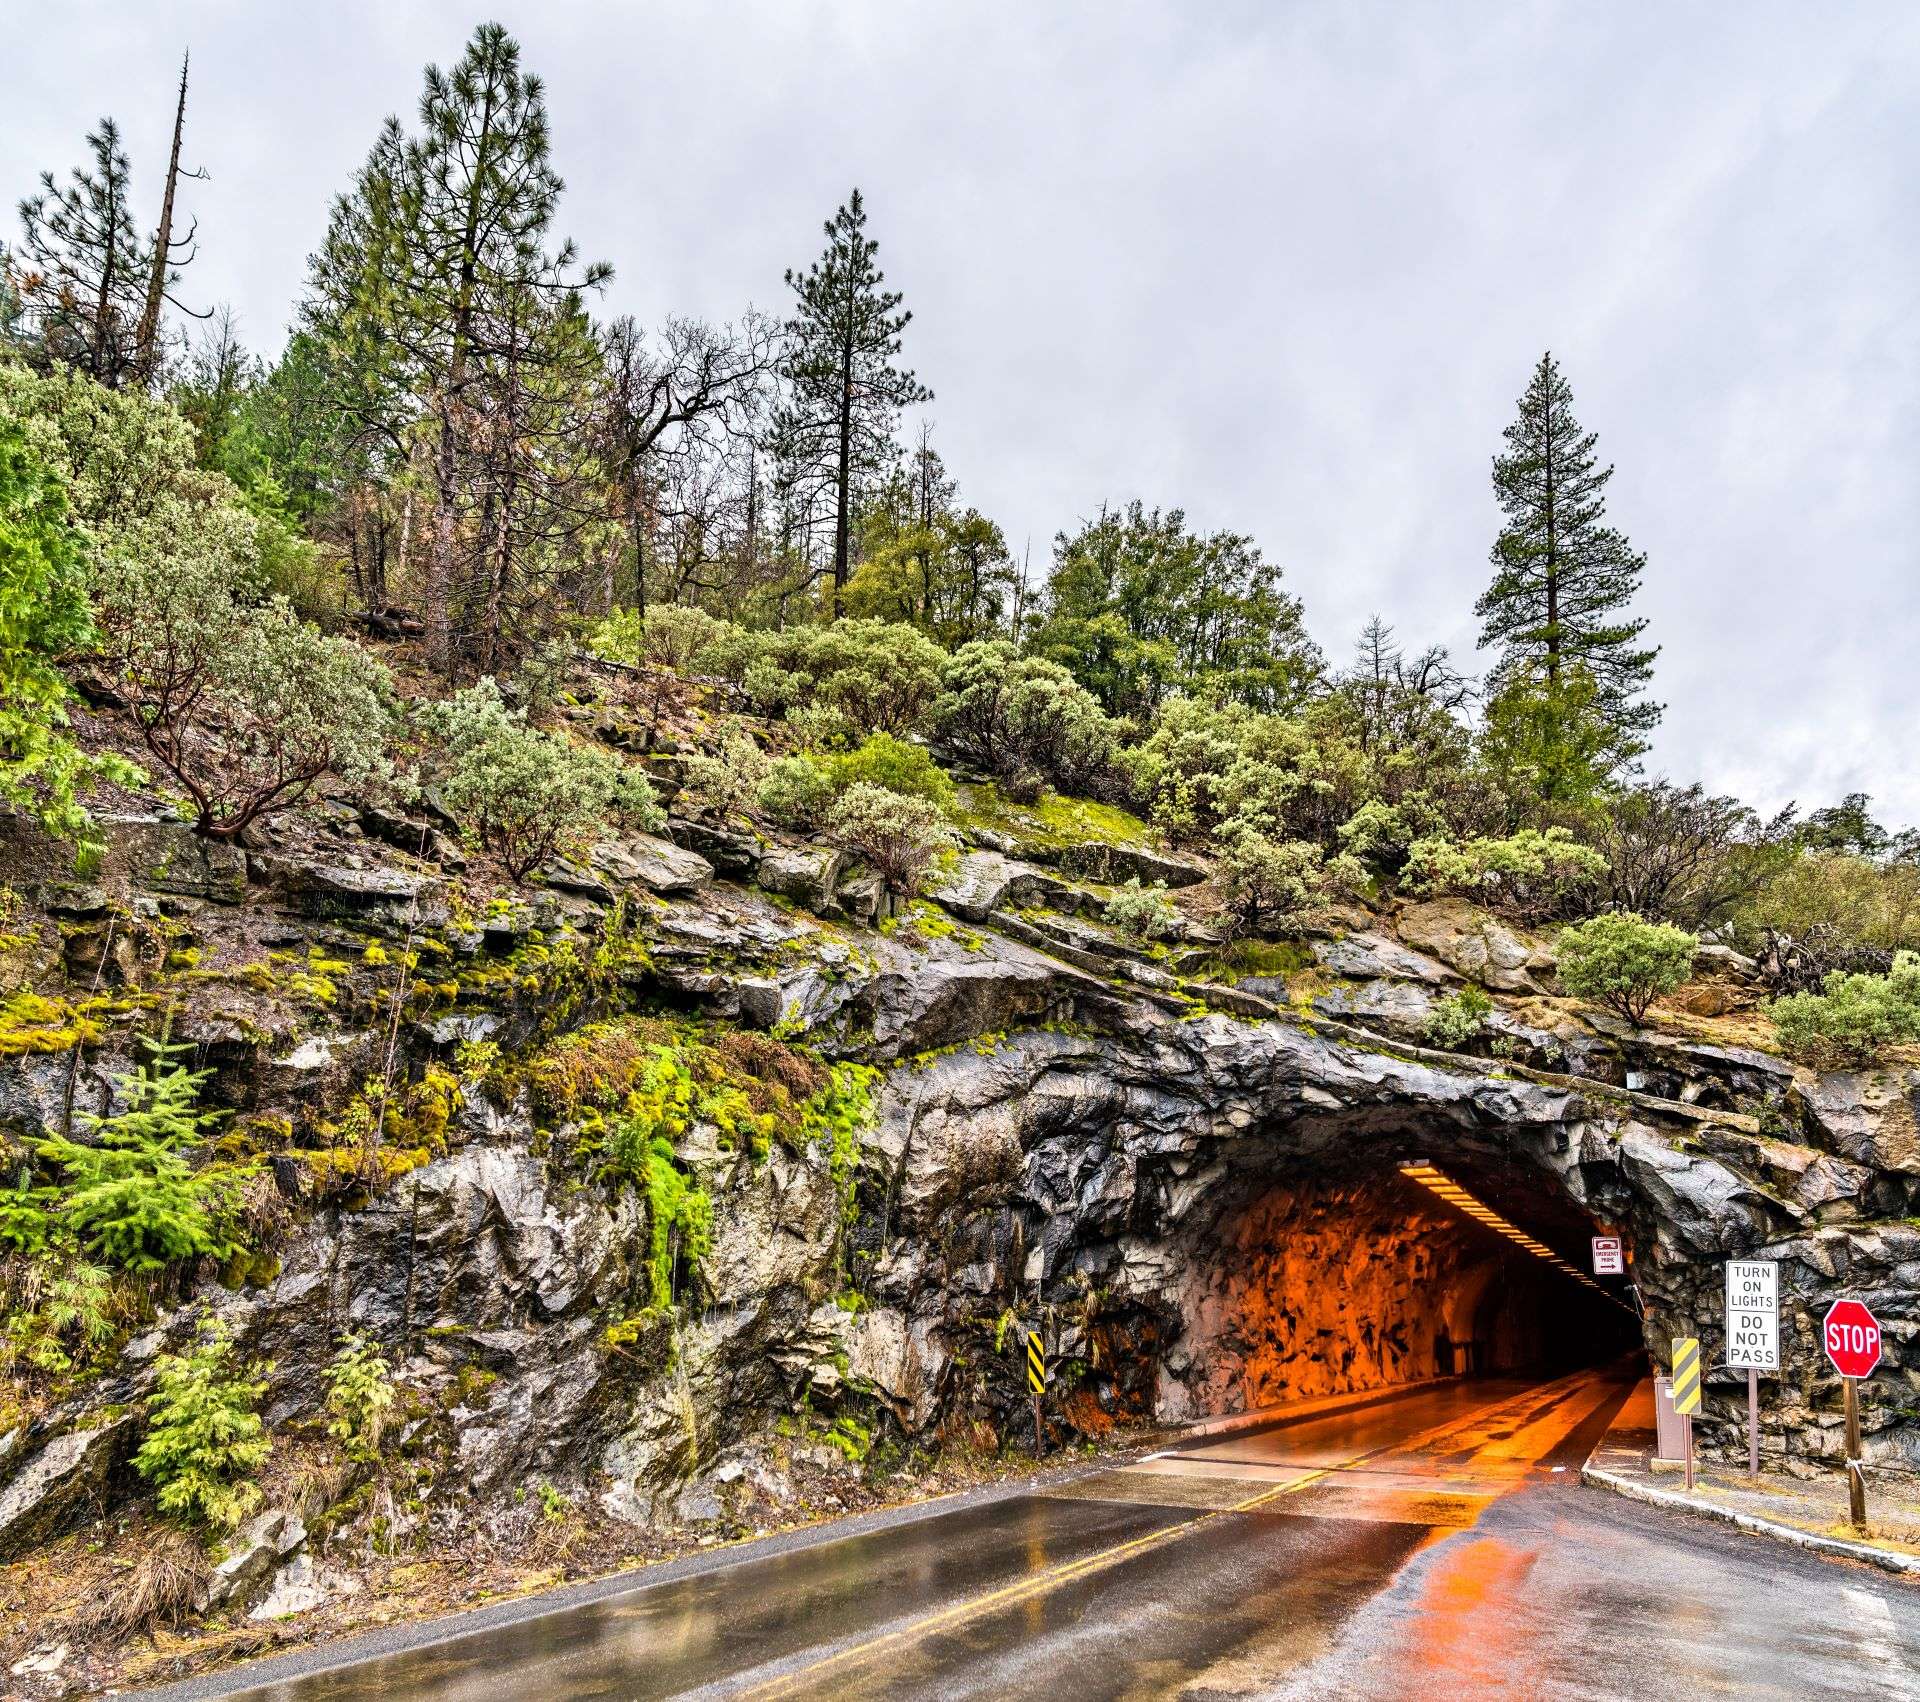 The Wawona tunnel in Yosemite National Park, California